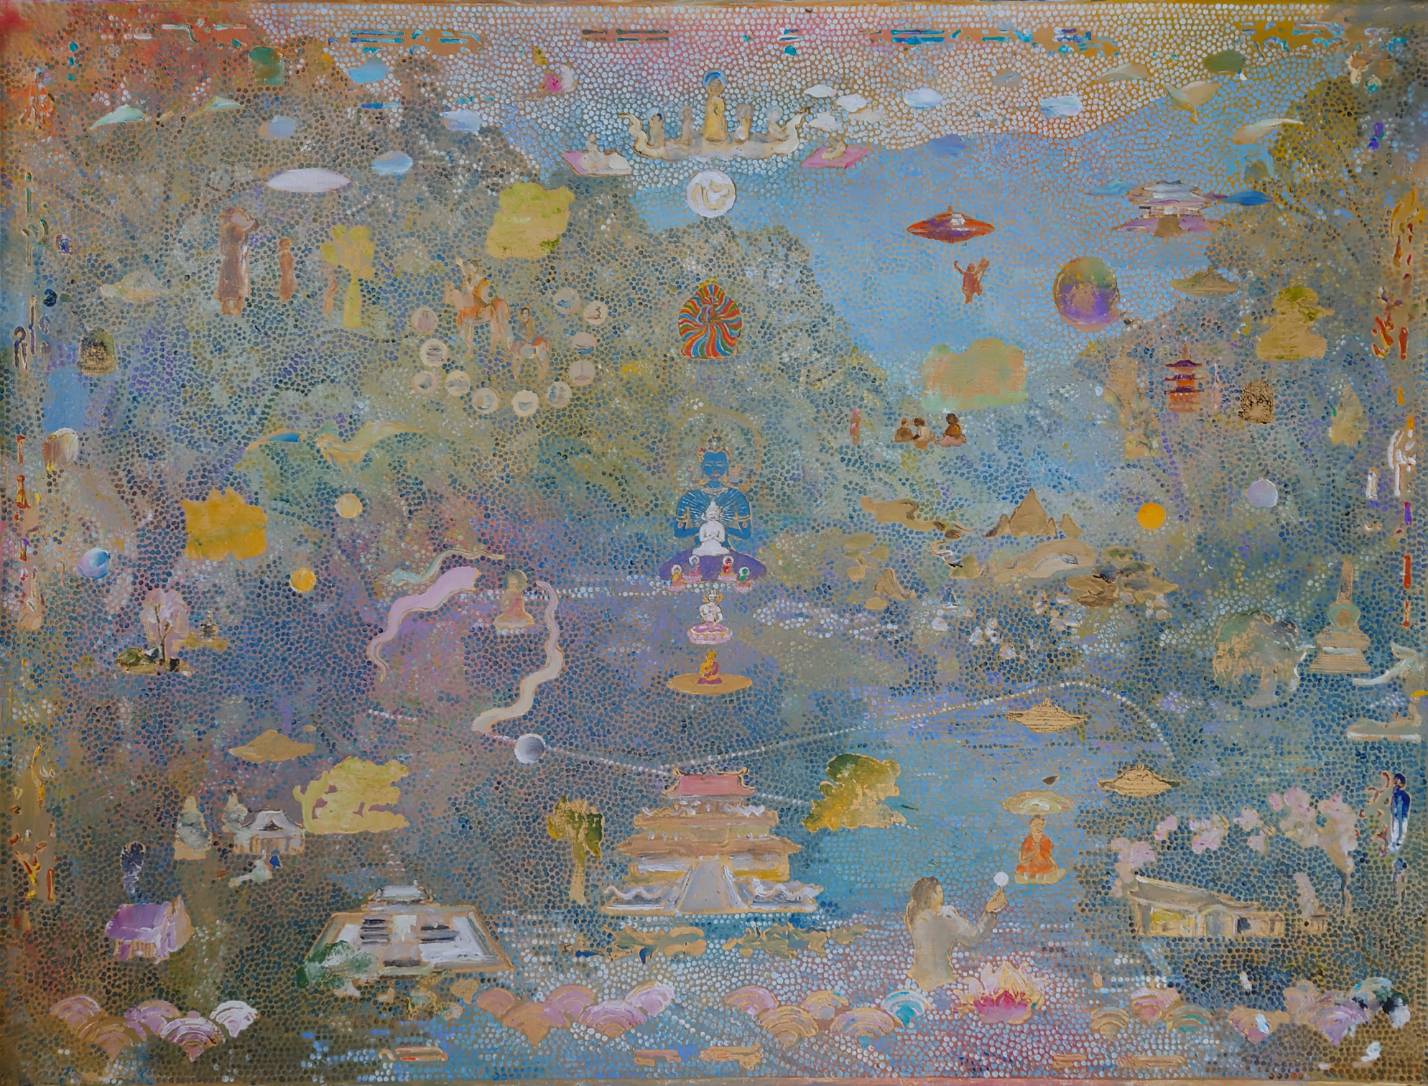 ‘Buddha Within’, 2022, acrylic on linen, 92 x 123 cm